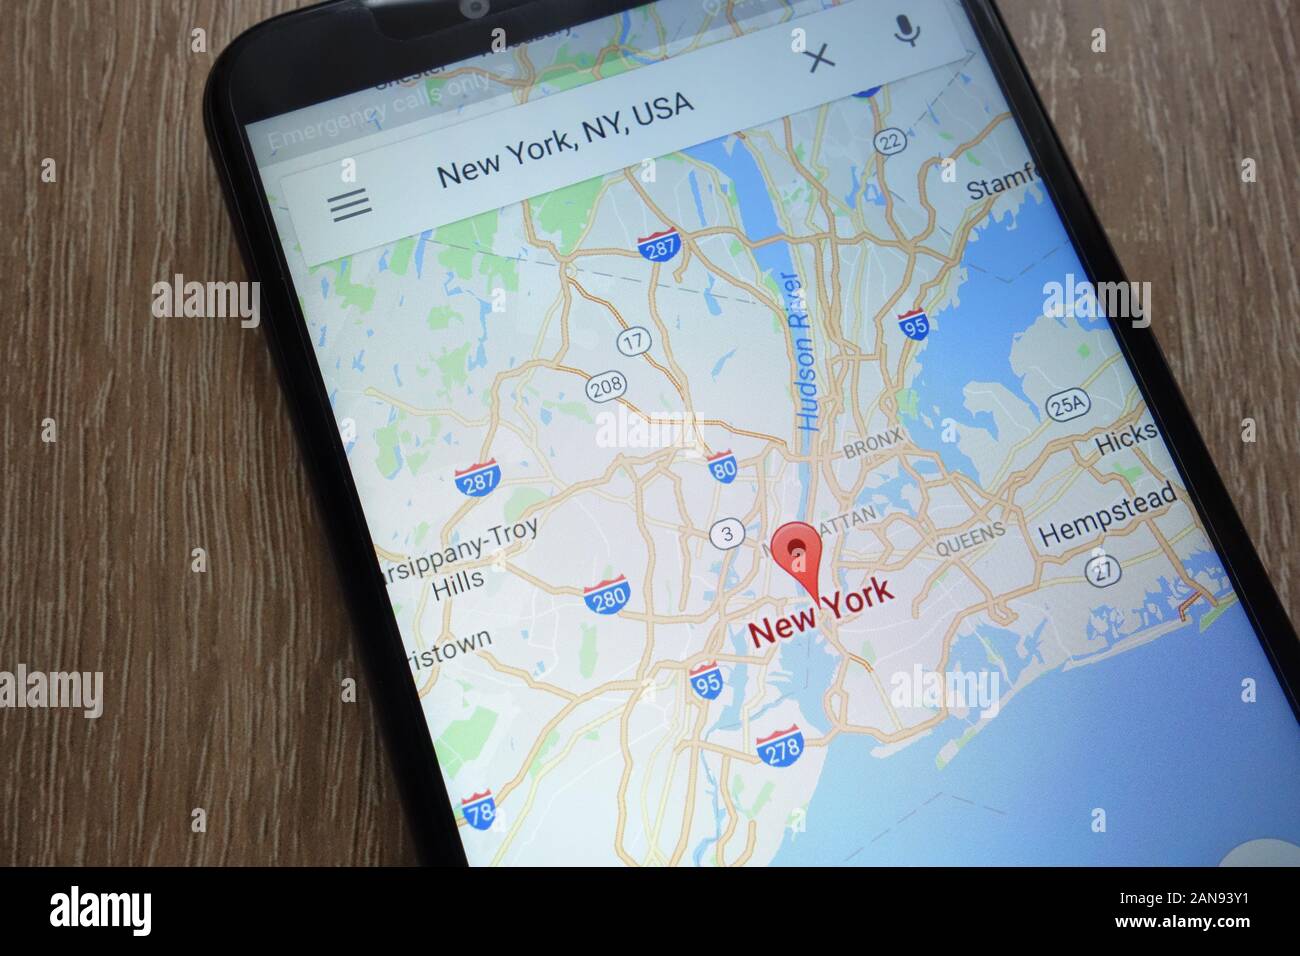 New York Location On Google Maps App Displayed On A Modern